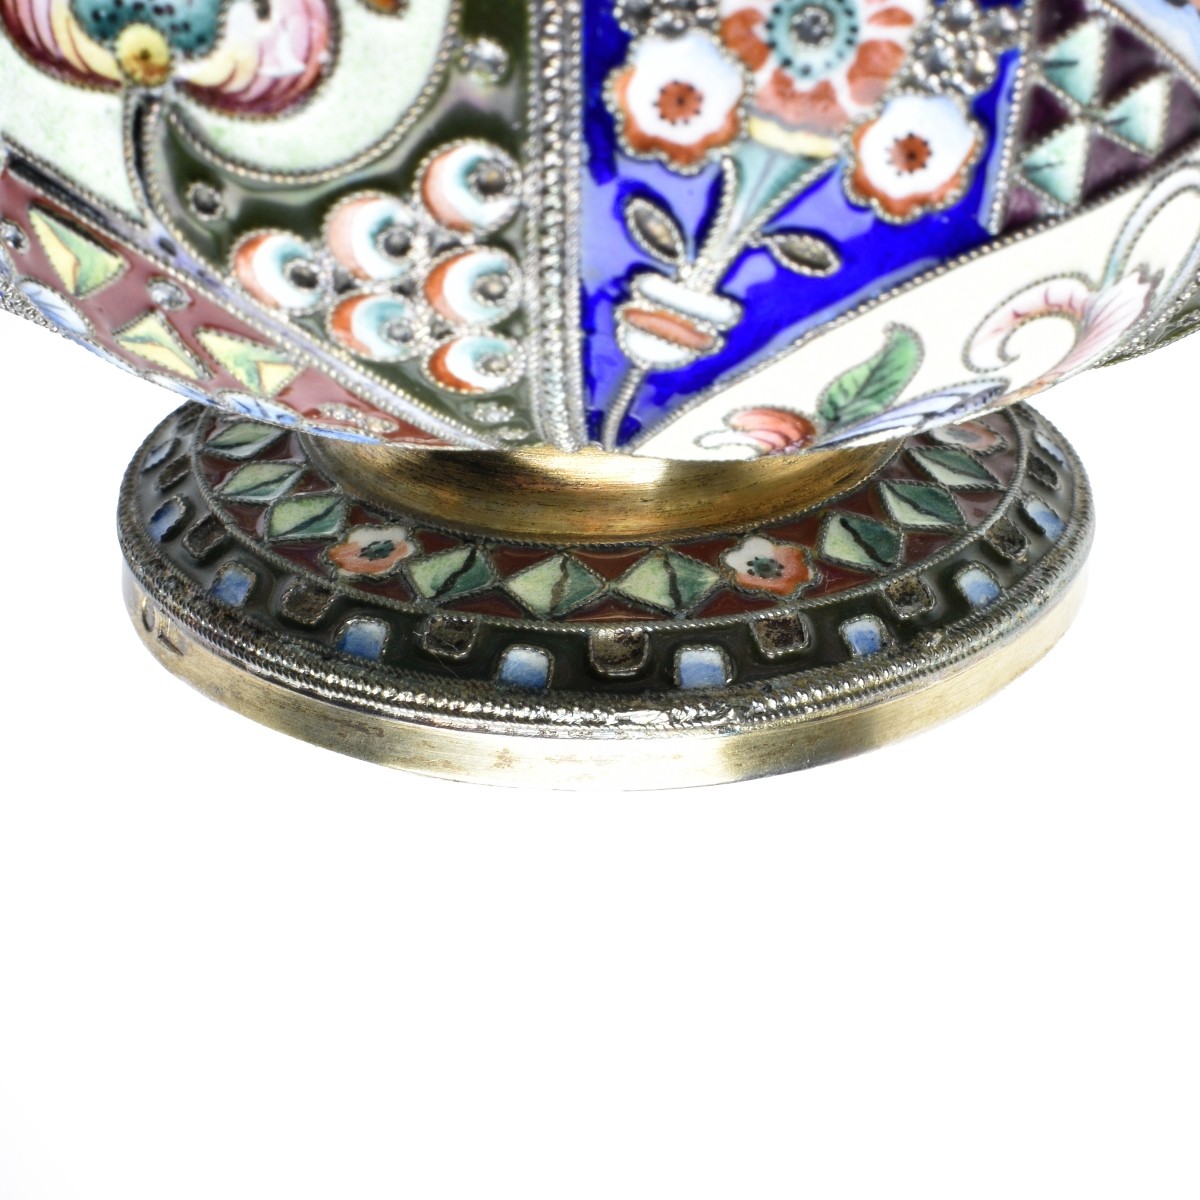 Russian Enamel Silver Gilt Bowl